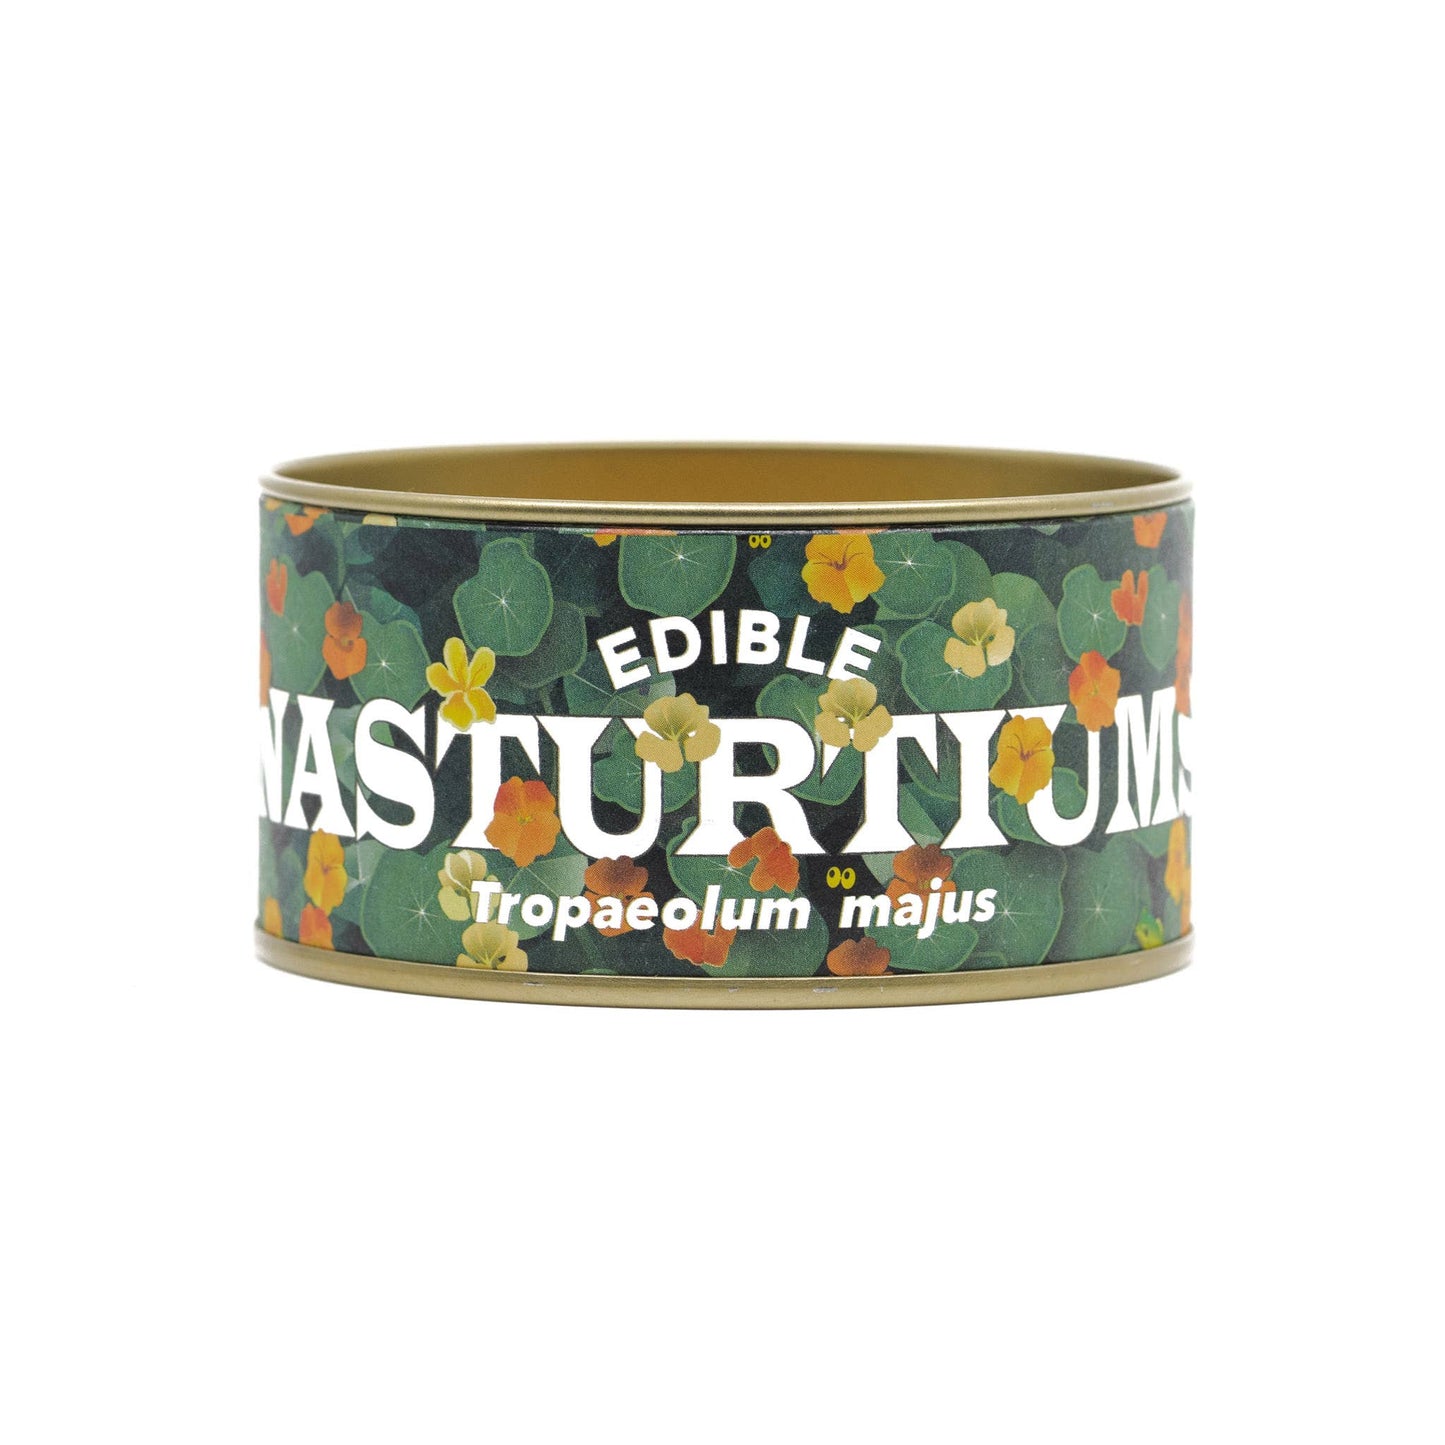 Nasturtium | Flower Seed Grow Kit - The Crowd Went Wild